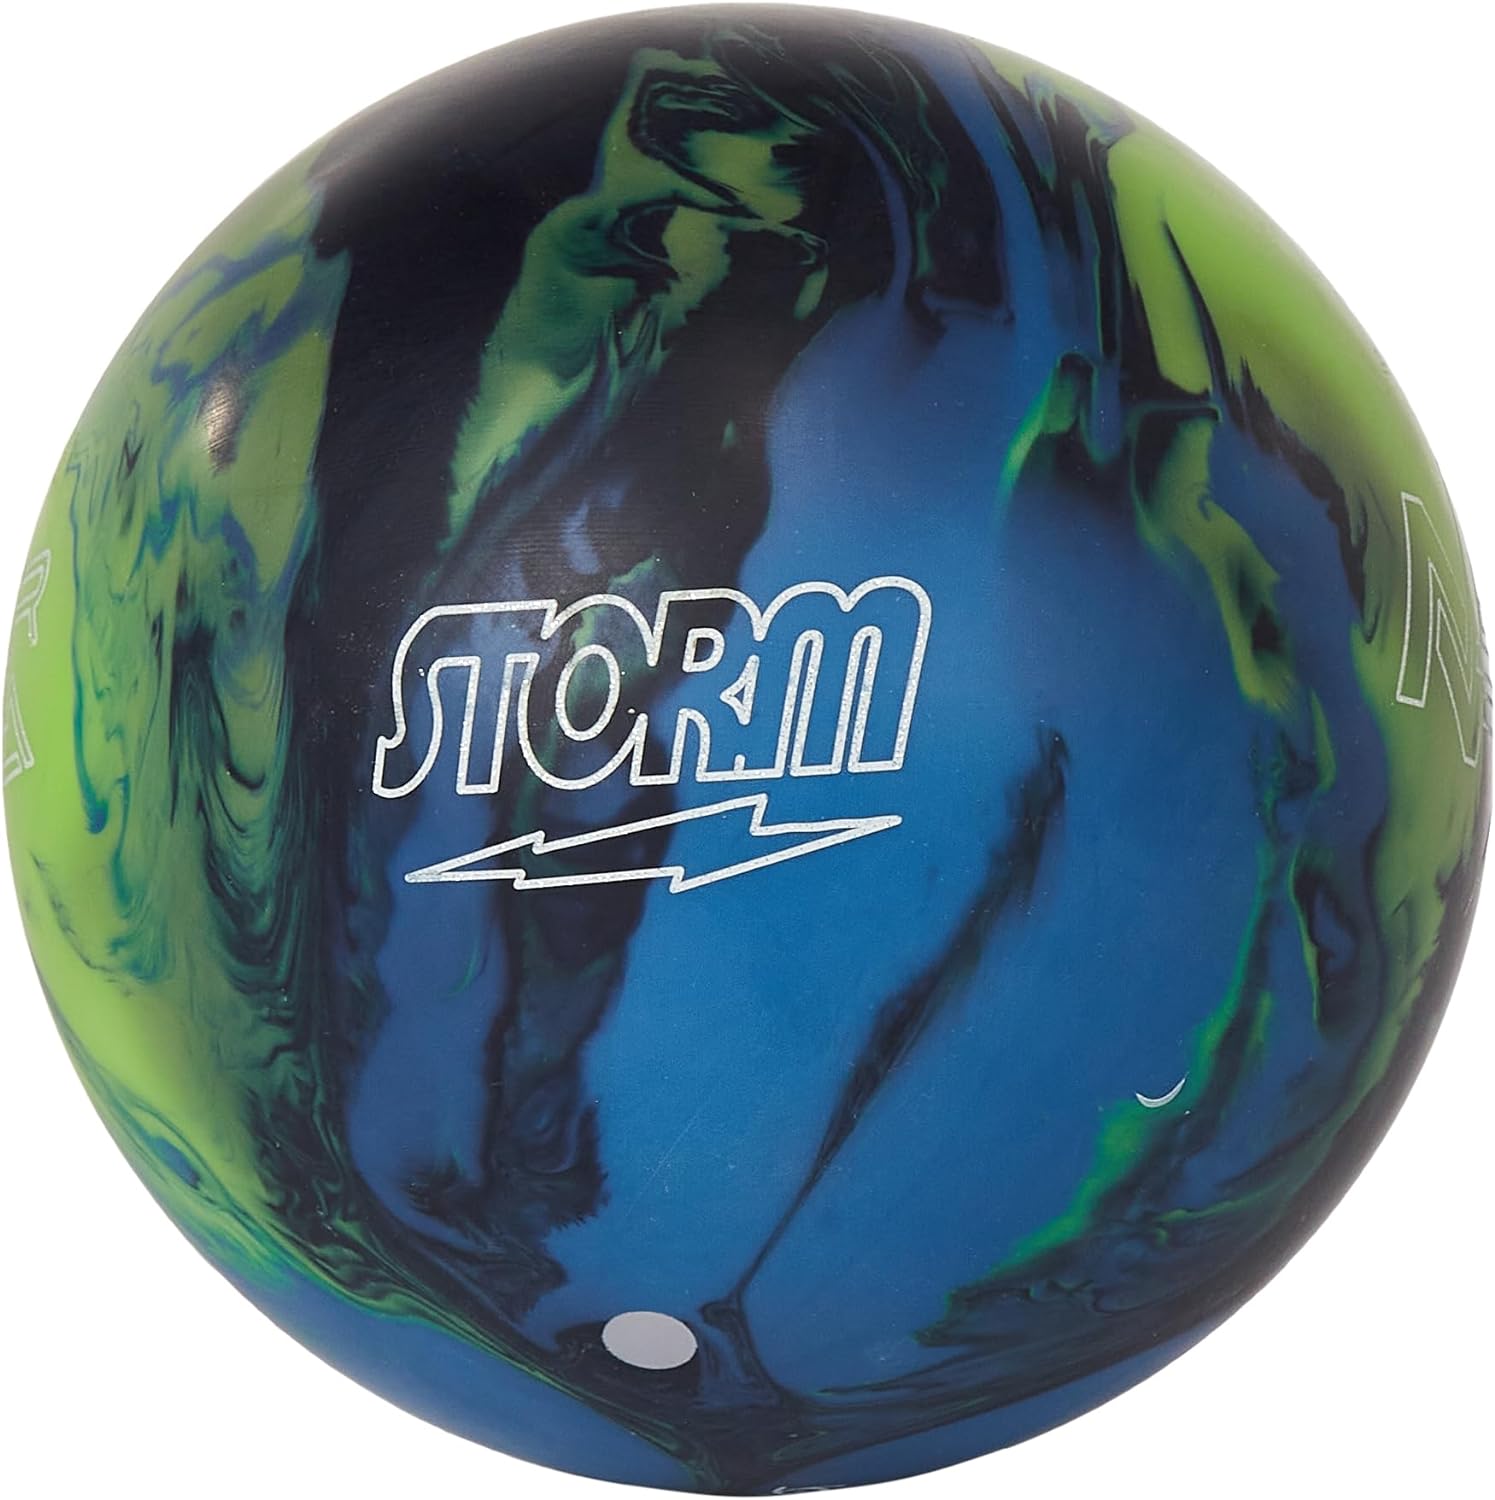 StormBowling Ball